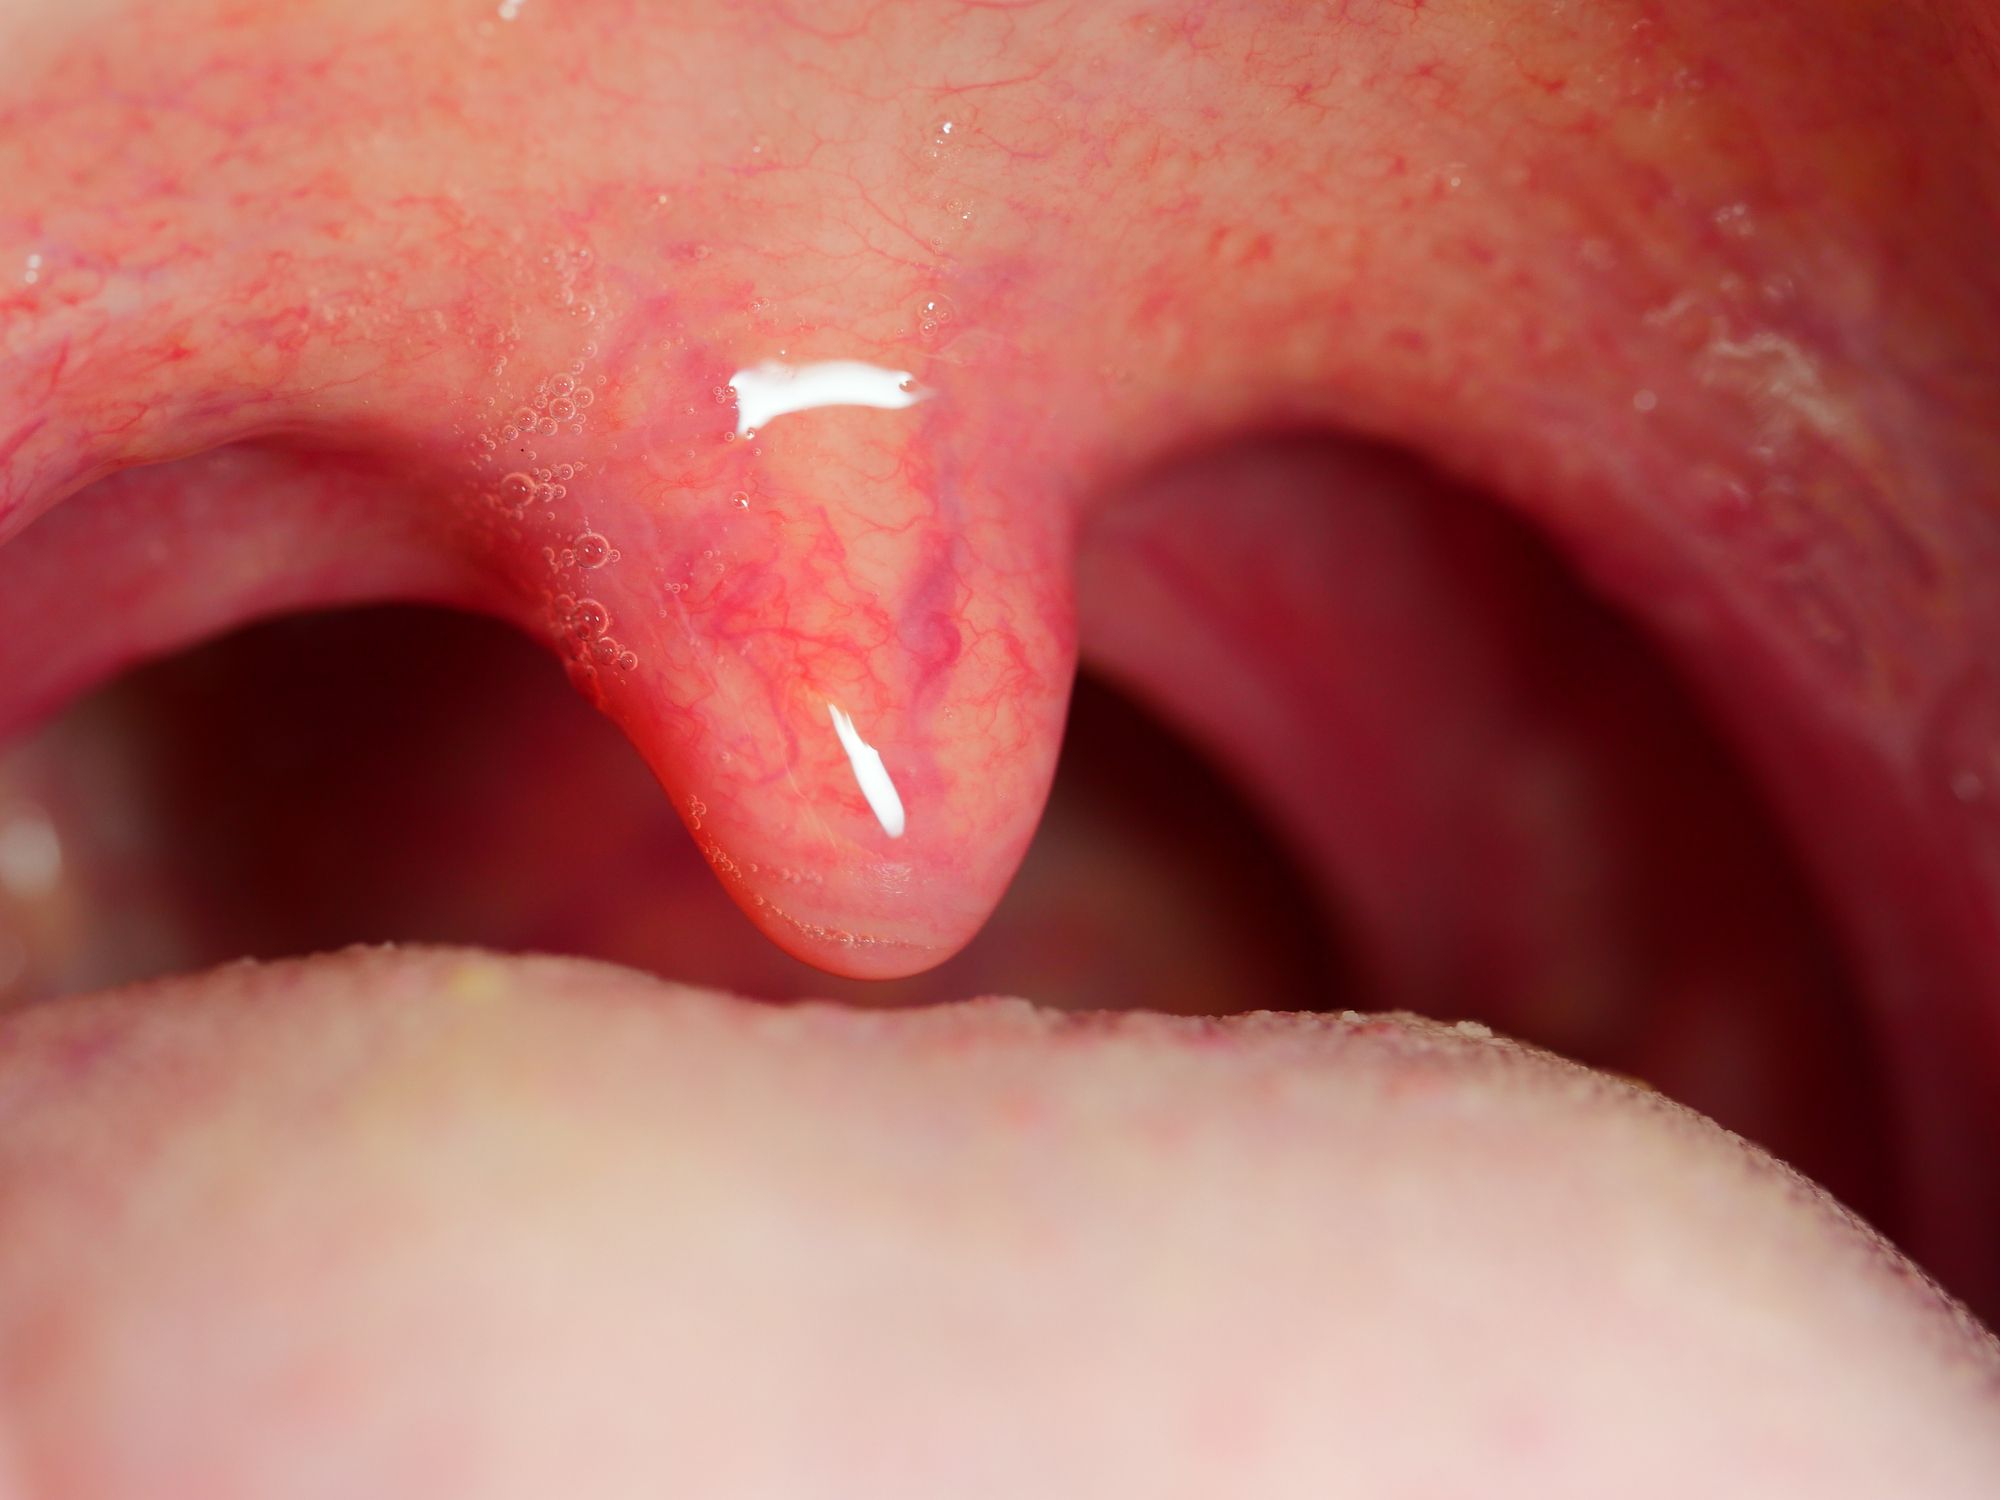 Hpv throat itchy. Hpv throat itchy, Papillomatosis vestibular papilloma - fotobiennale.ro